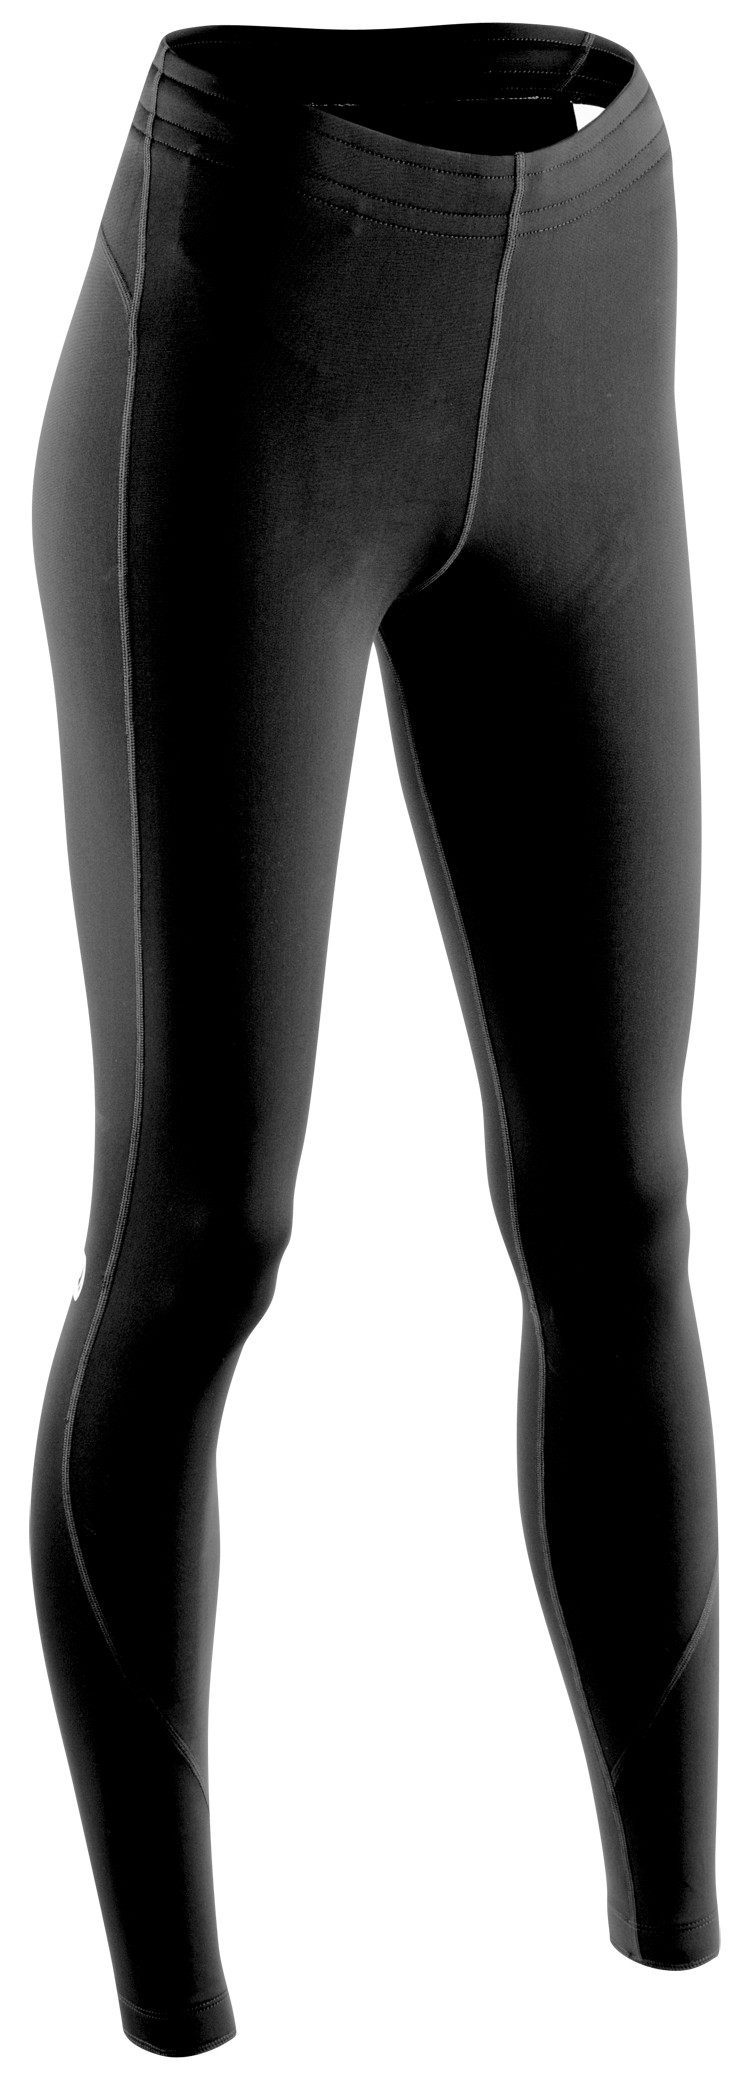 Рейтузы Sugoi Linear MIDZERO TIGHT, женские, gunmetal/black (серо-черные), XS фото 